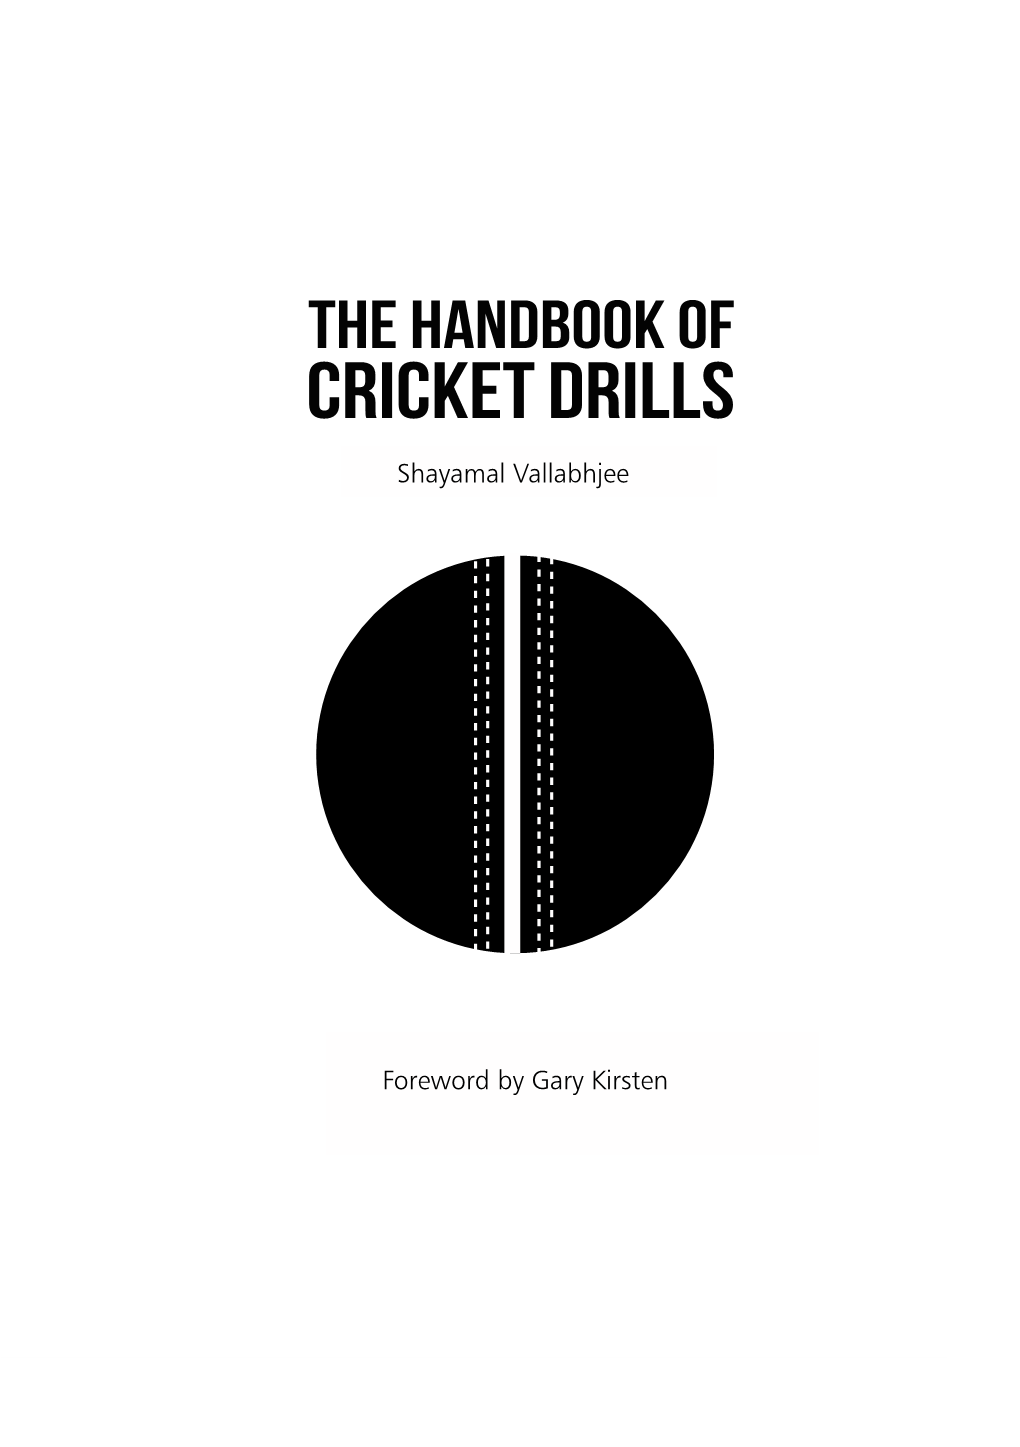 THE HANDBOOK of CRICKET DRILLS Shayamal Vallabhjee the Handbook of Cricket Drills 3